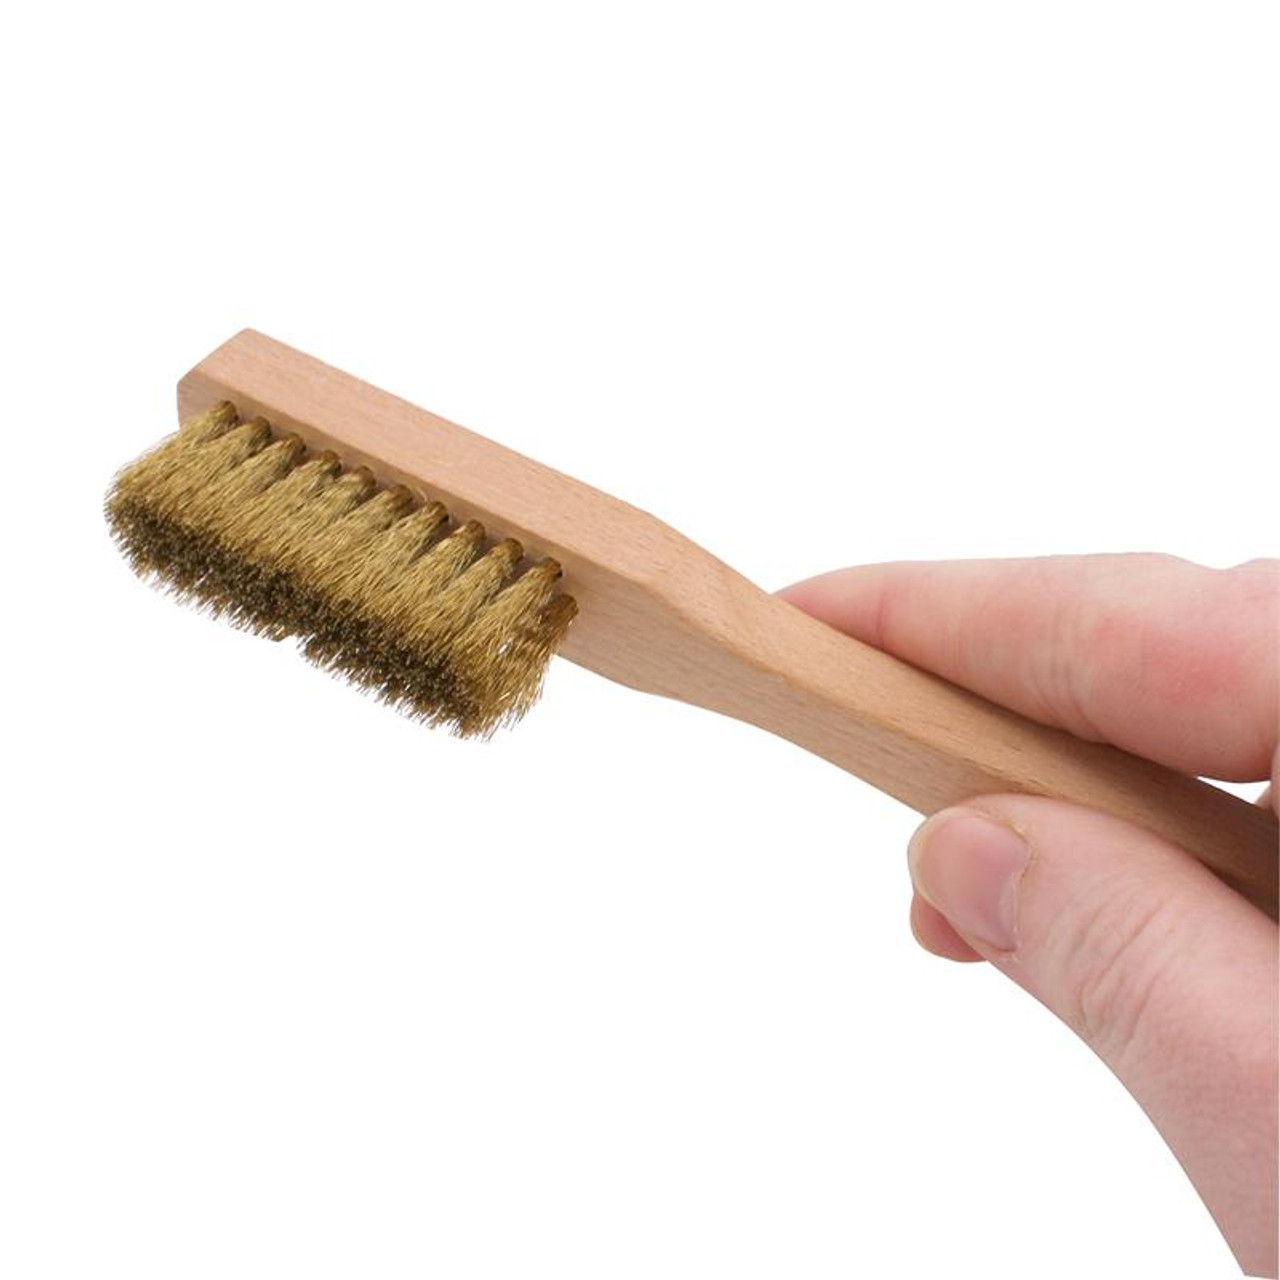 6 Inch Wood Handled Scratch Brush Brass Bristles